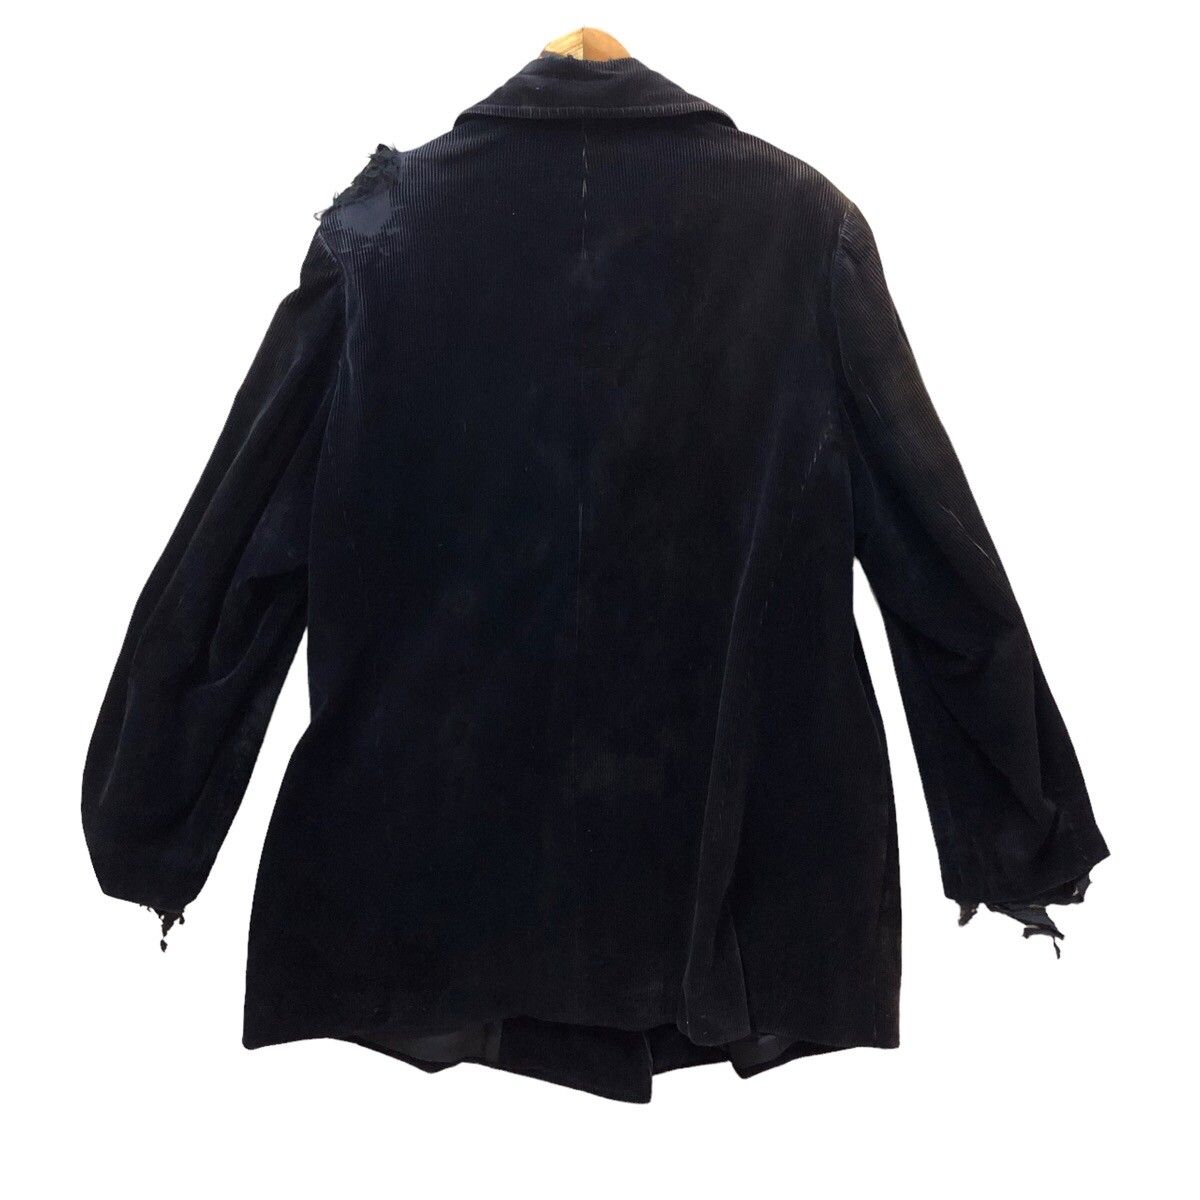 Vintage Yohji Yamamoto pour homme distressed curdoroy coat - 4